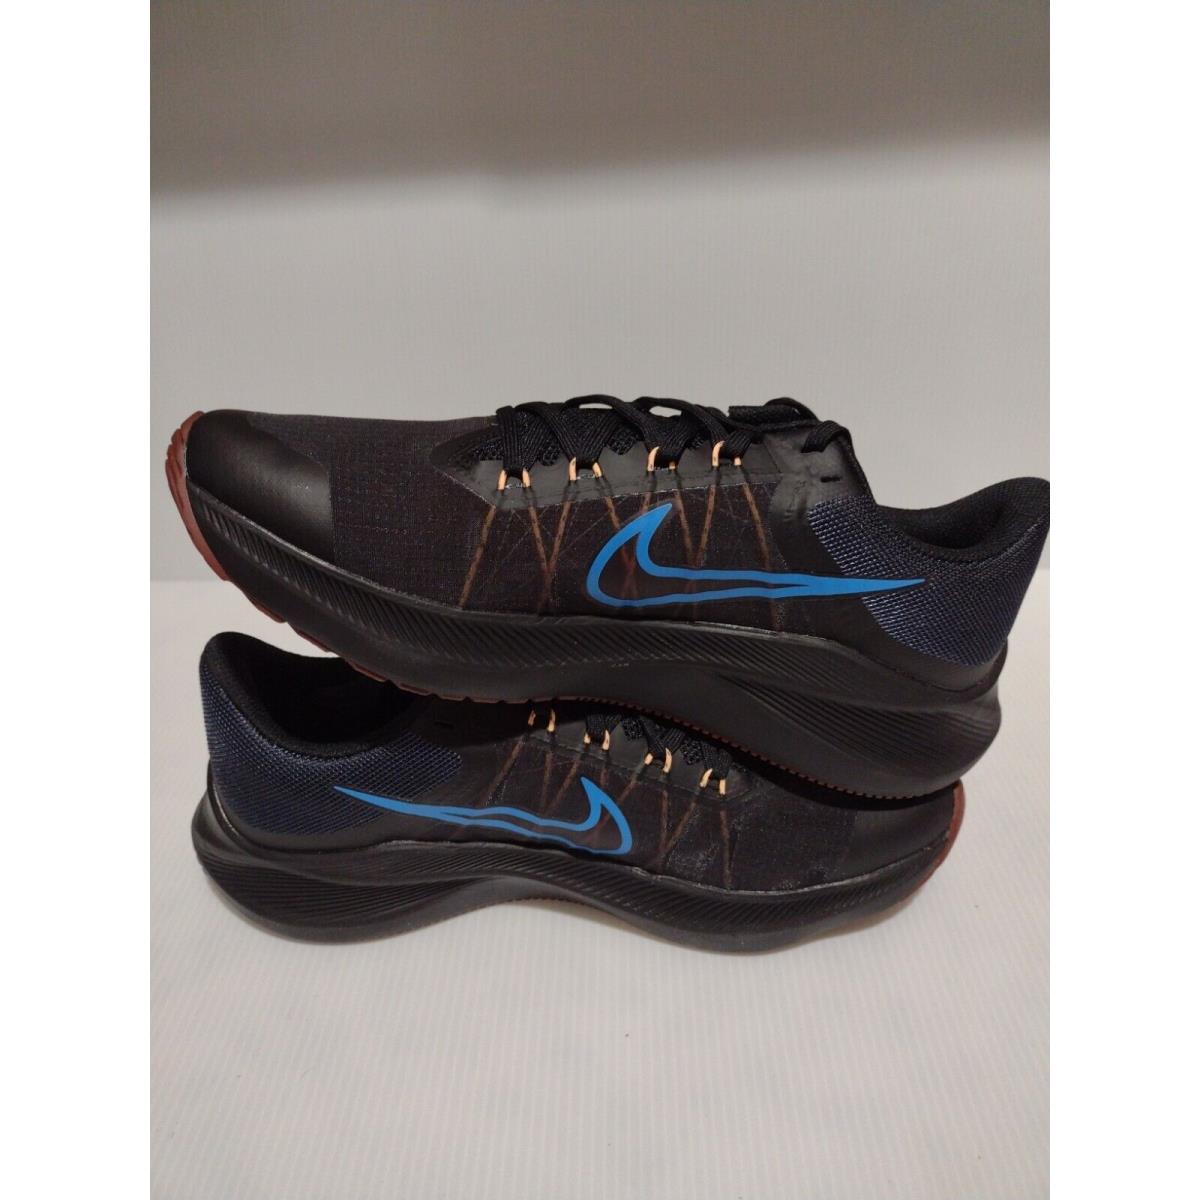 Nike shoes Zoom Winflo - Black 2